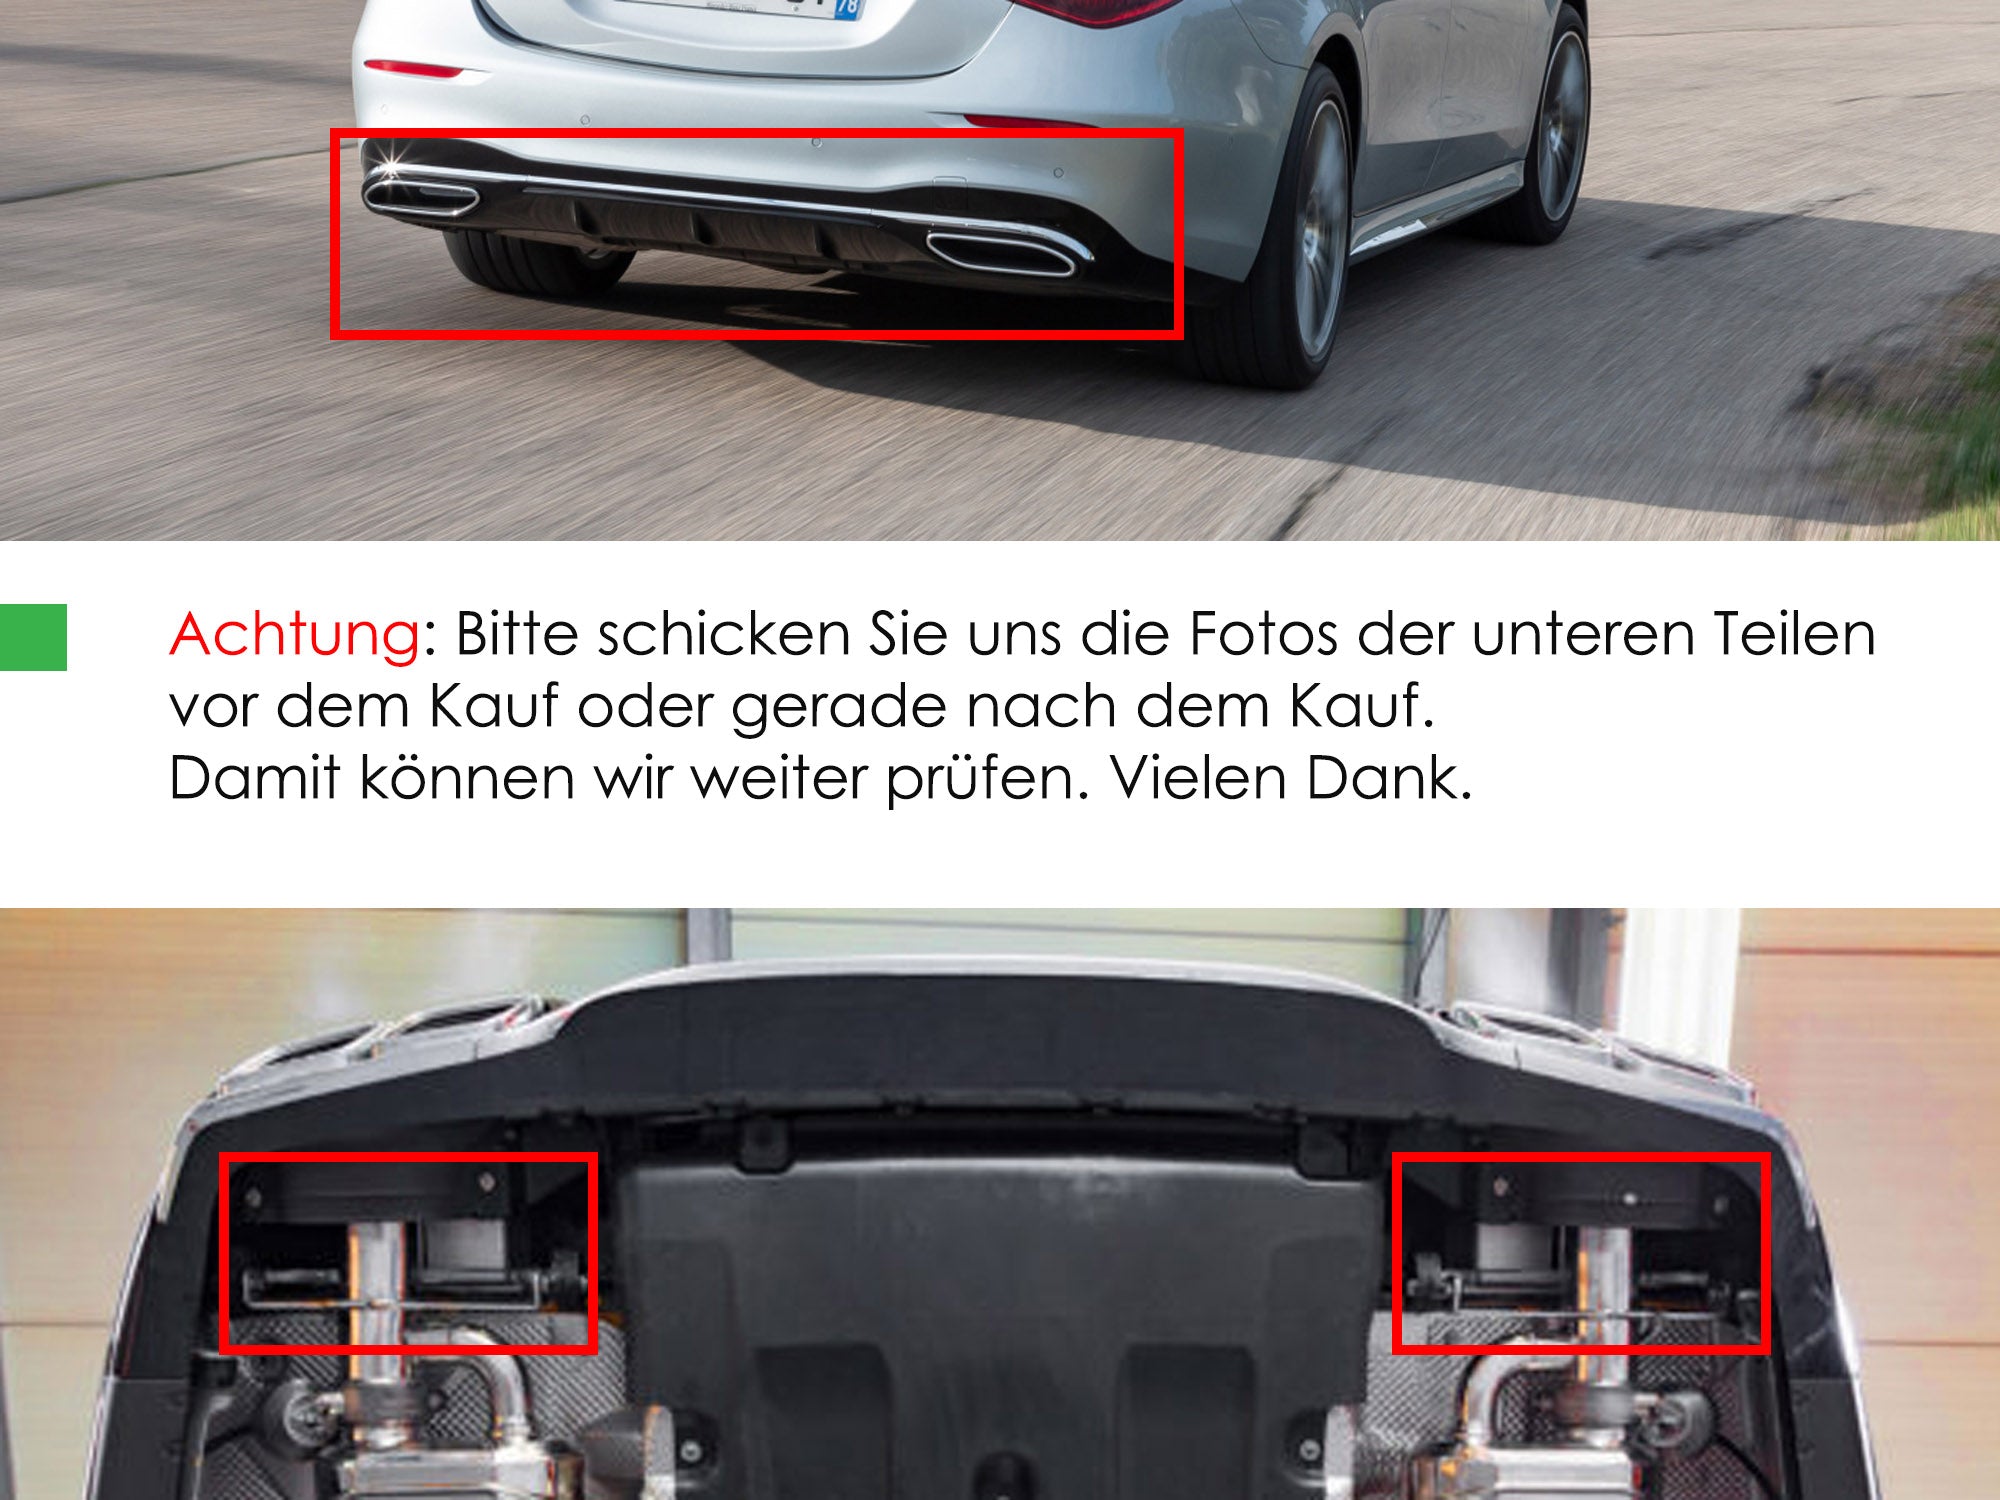 Diffusor Heckdiffusor + Auspuffblenden Chrom AMG Optik für Mercedes S-Klasse W222 V222 AMG Line VFL 2013-2017 di134